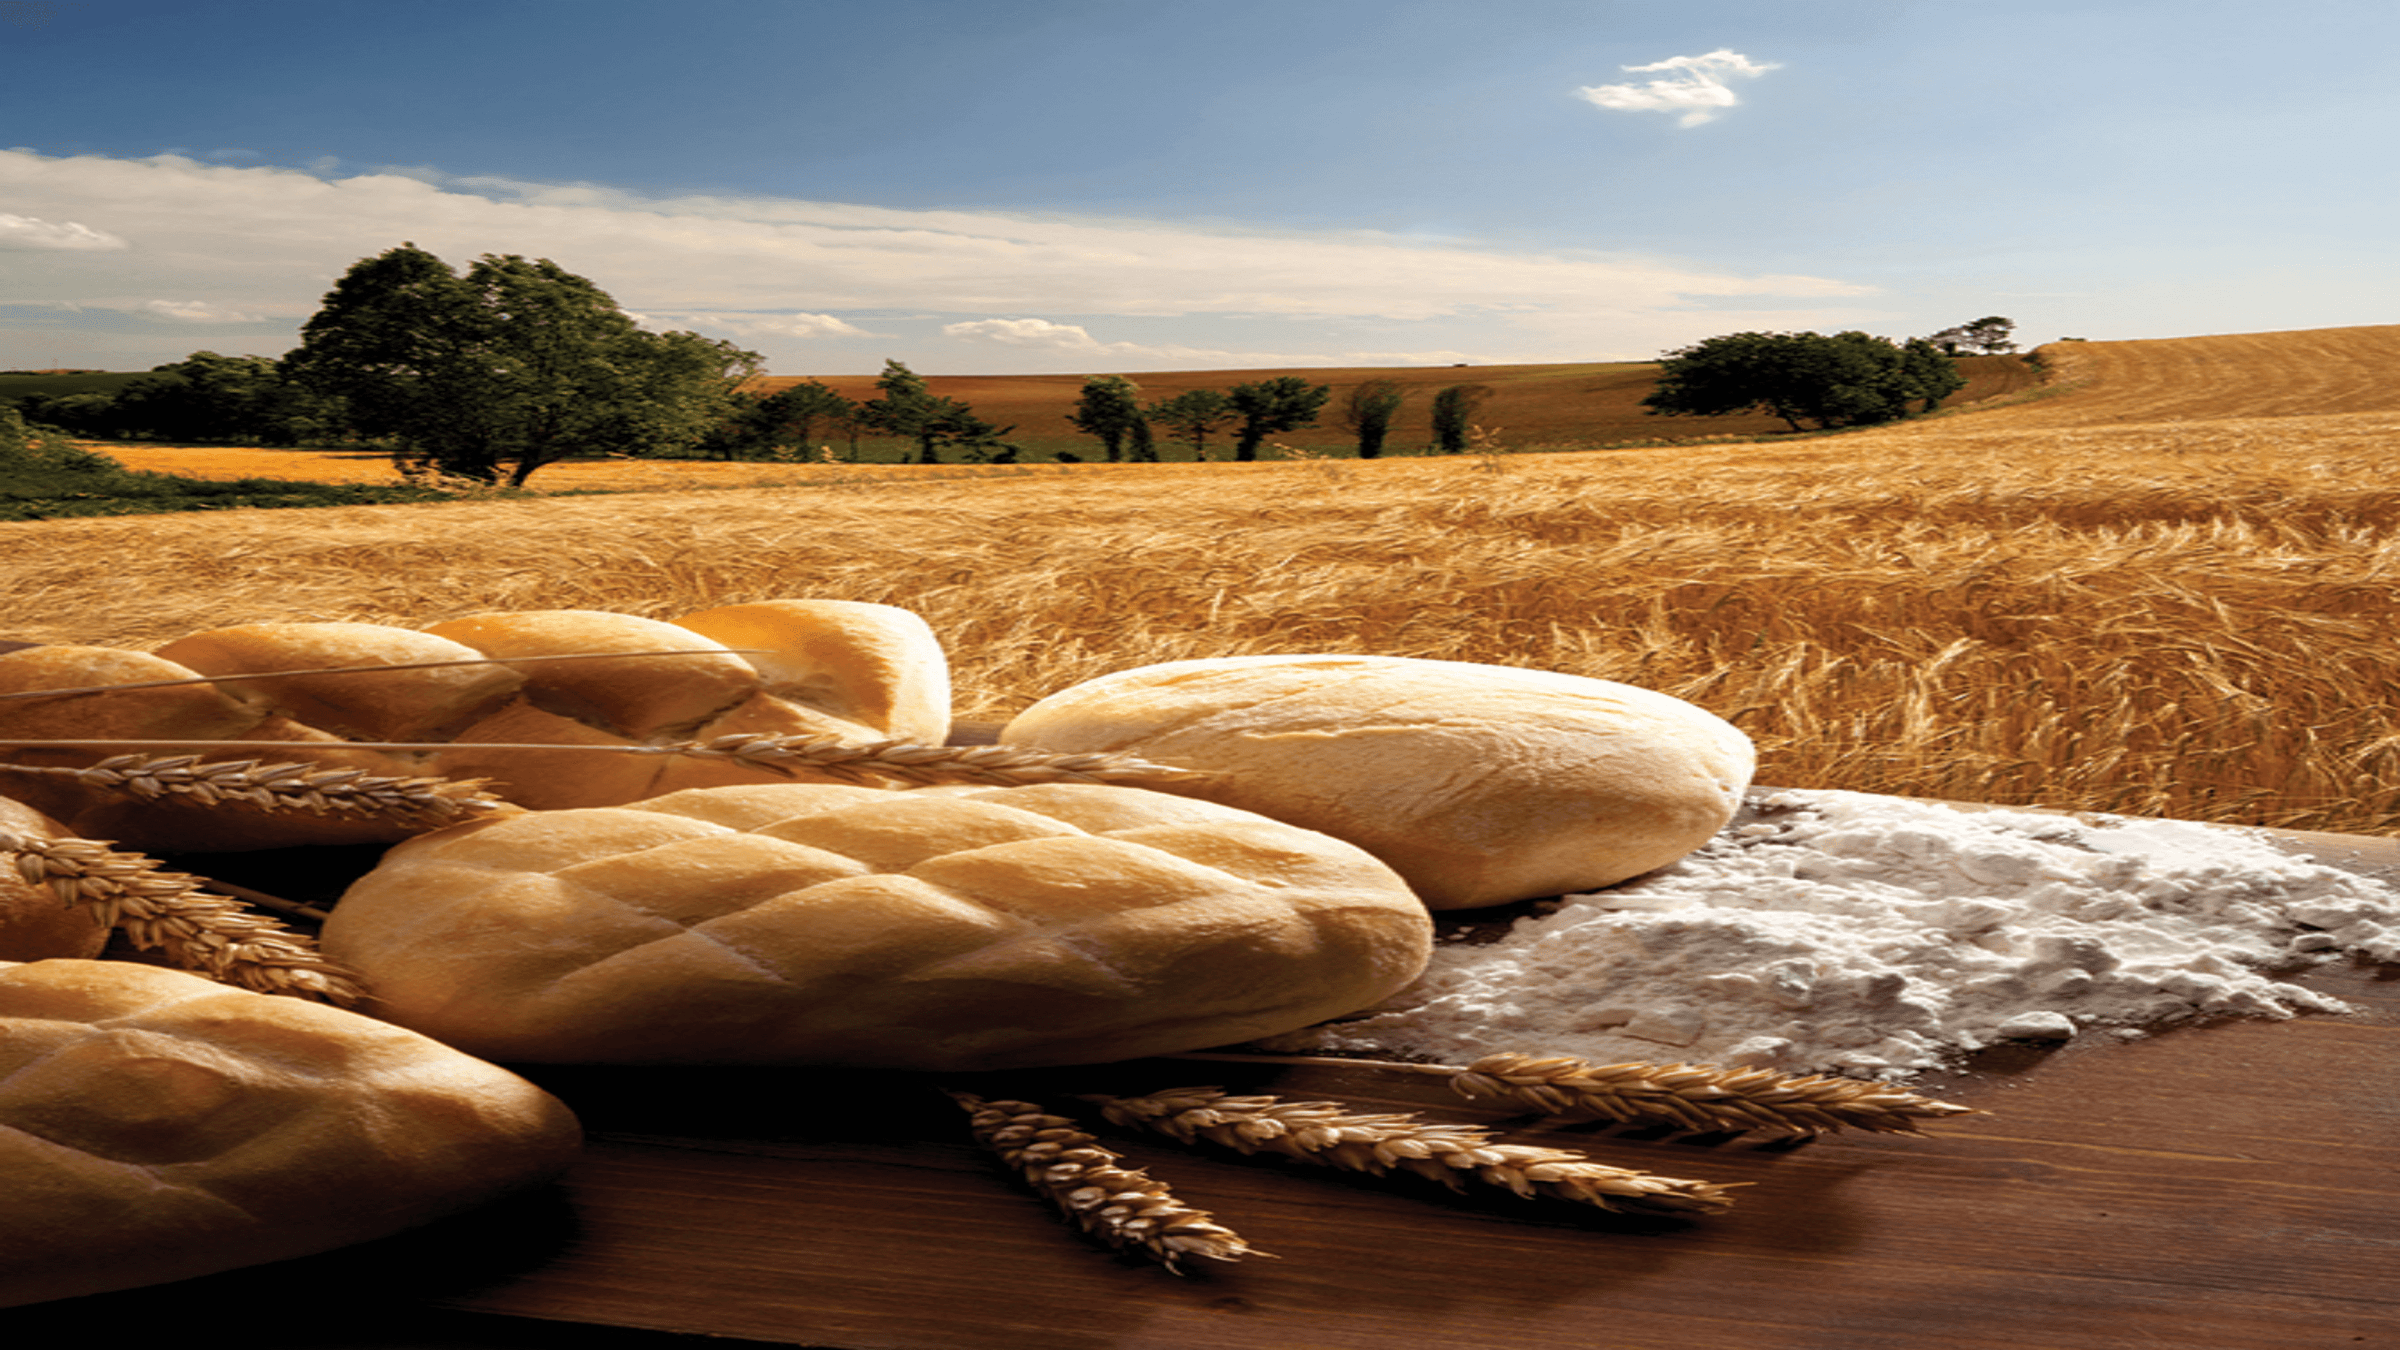 Bakery goods in a field of wheat